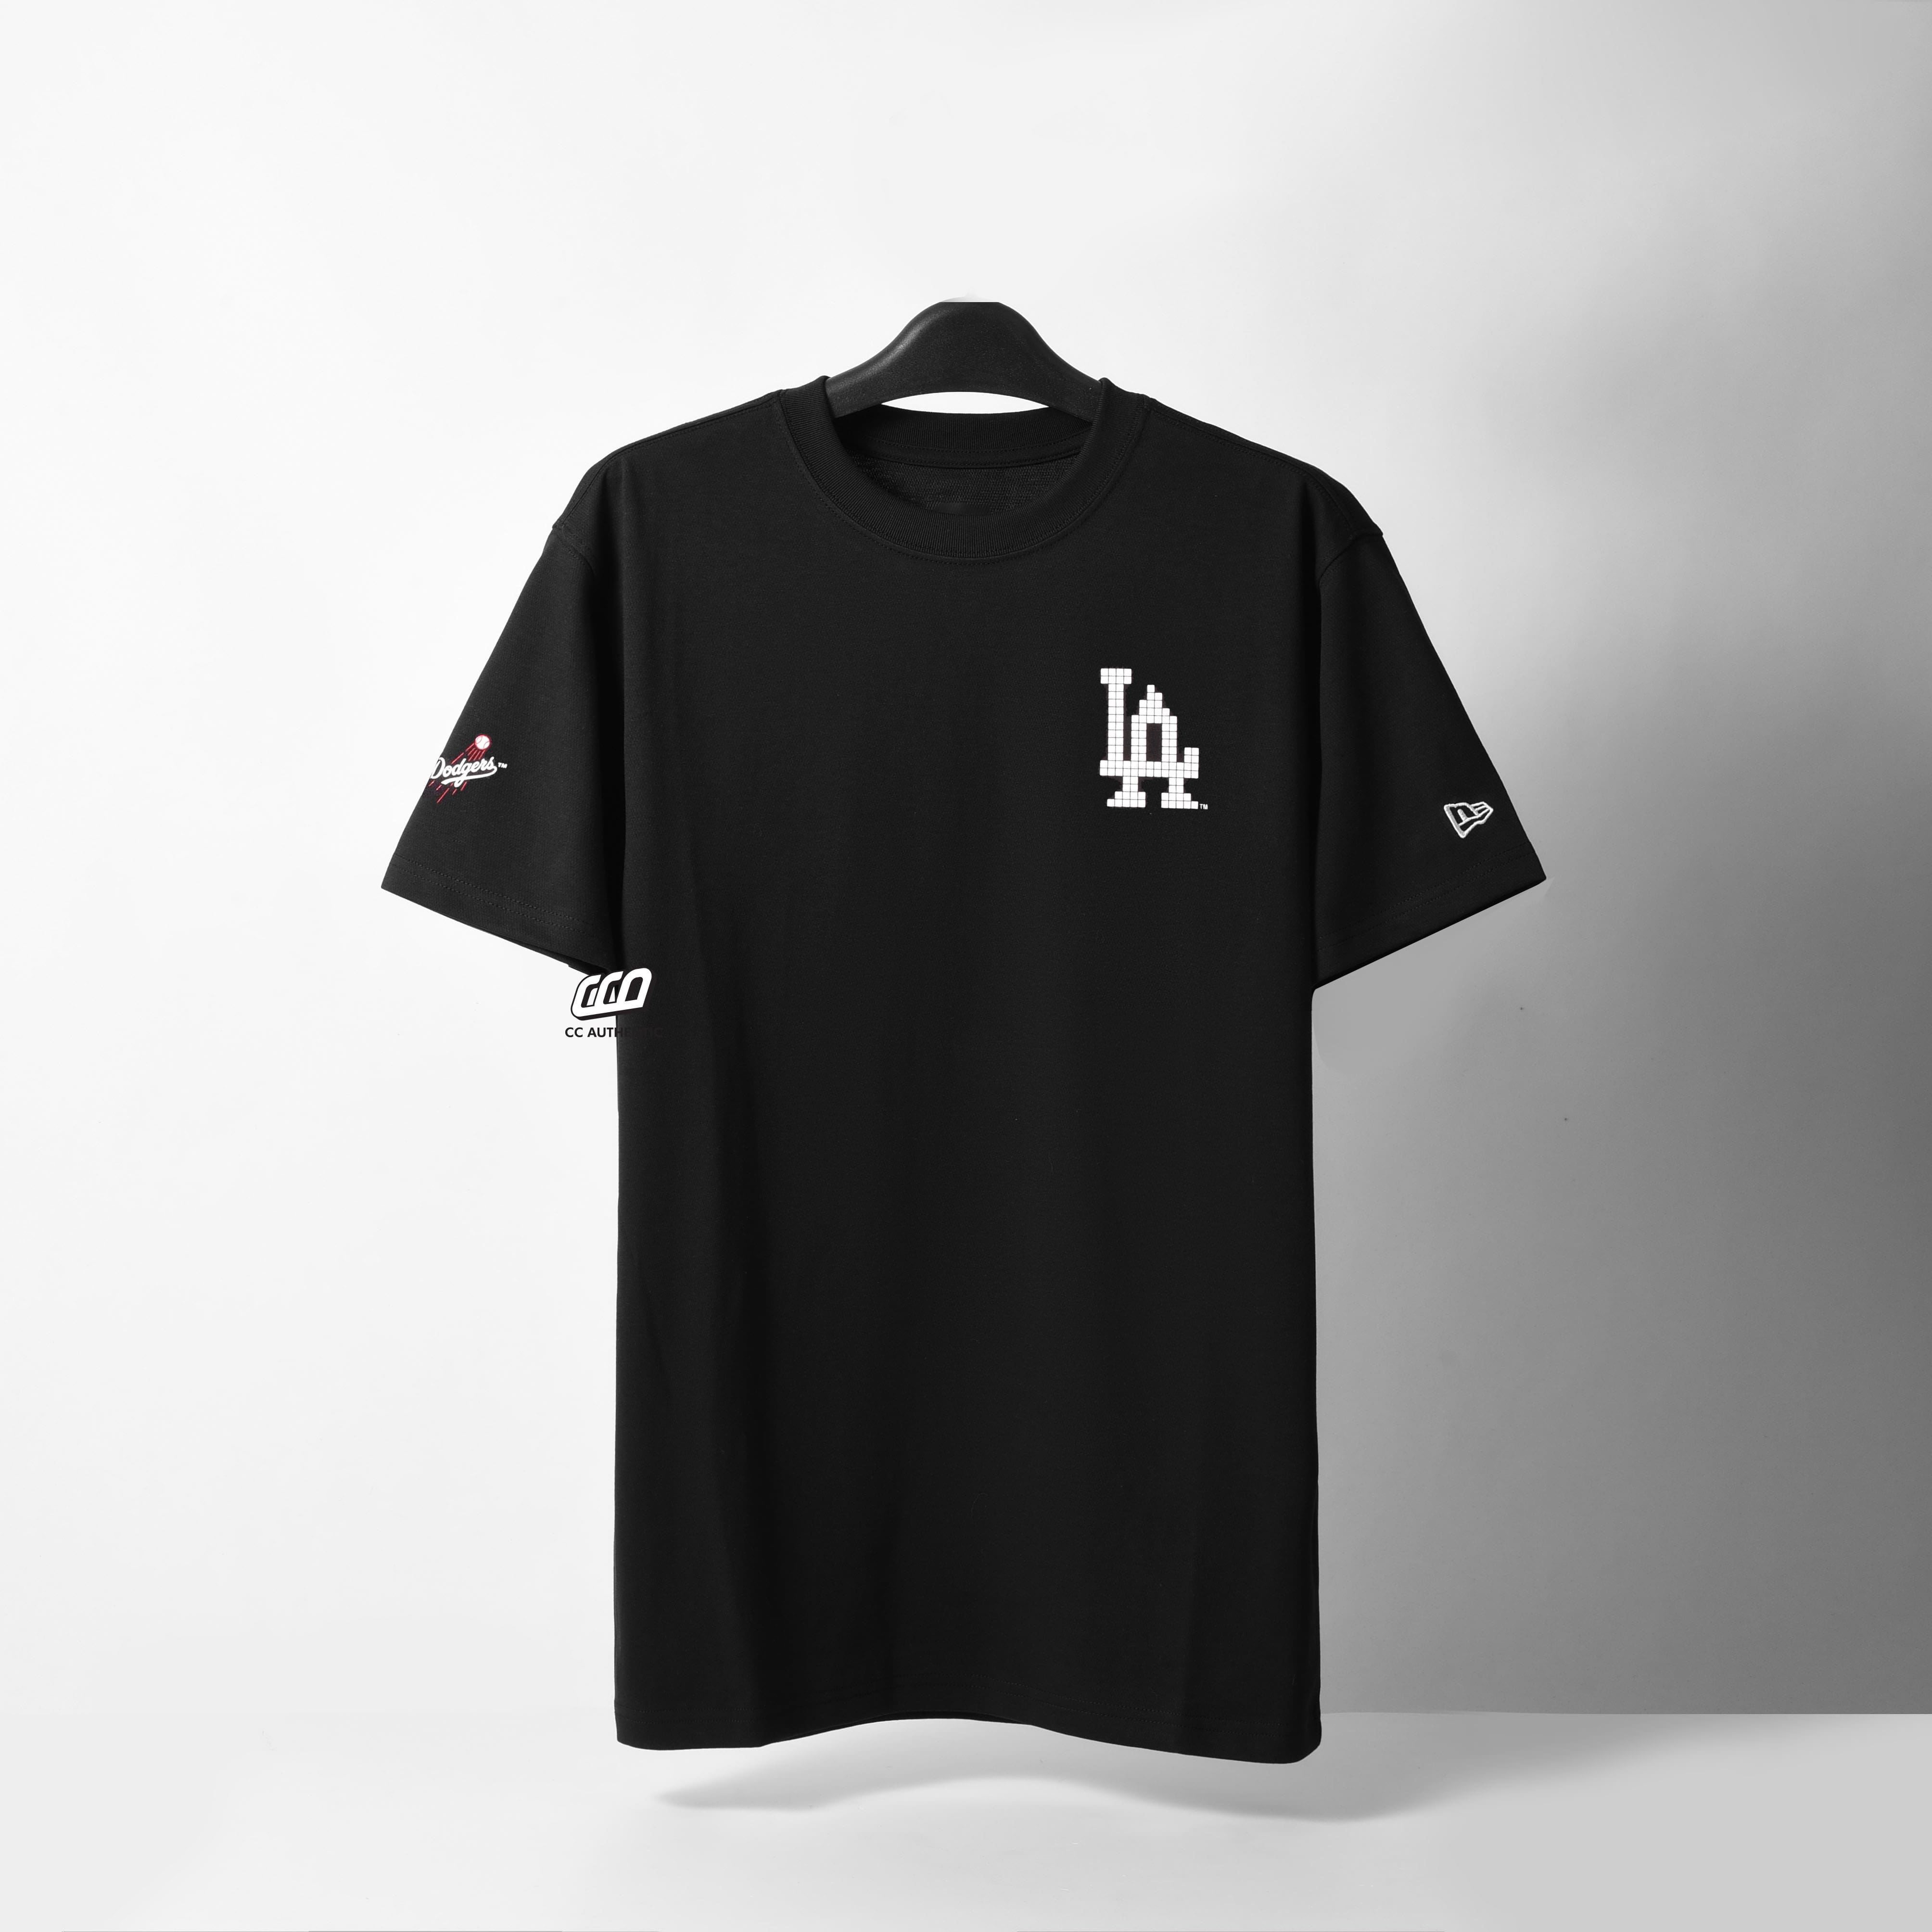 NEW ERA losdod blk t-shirt - BLACK